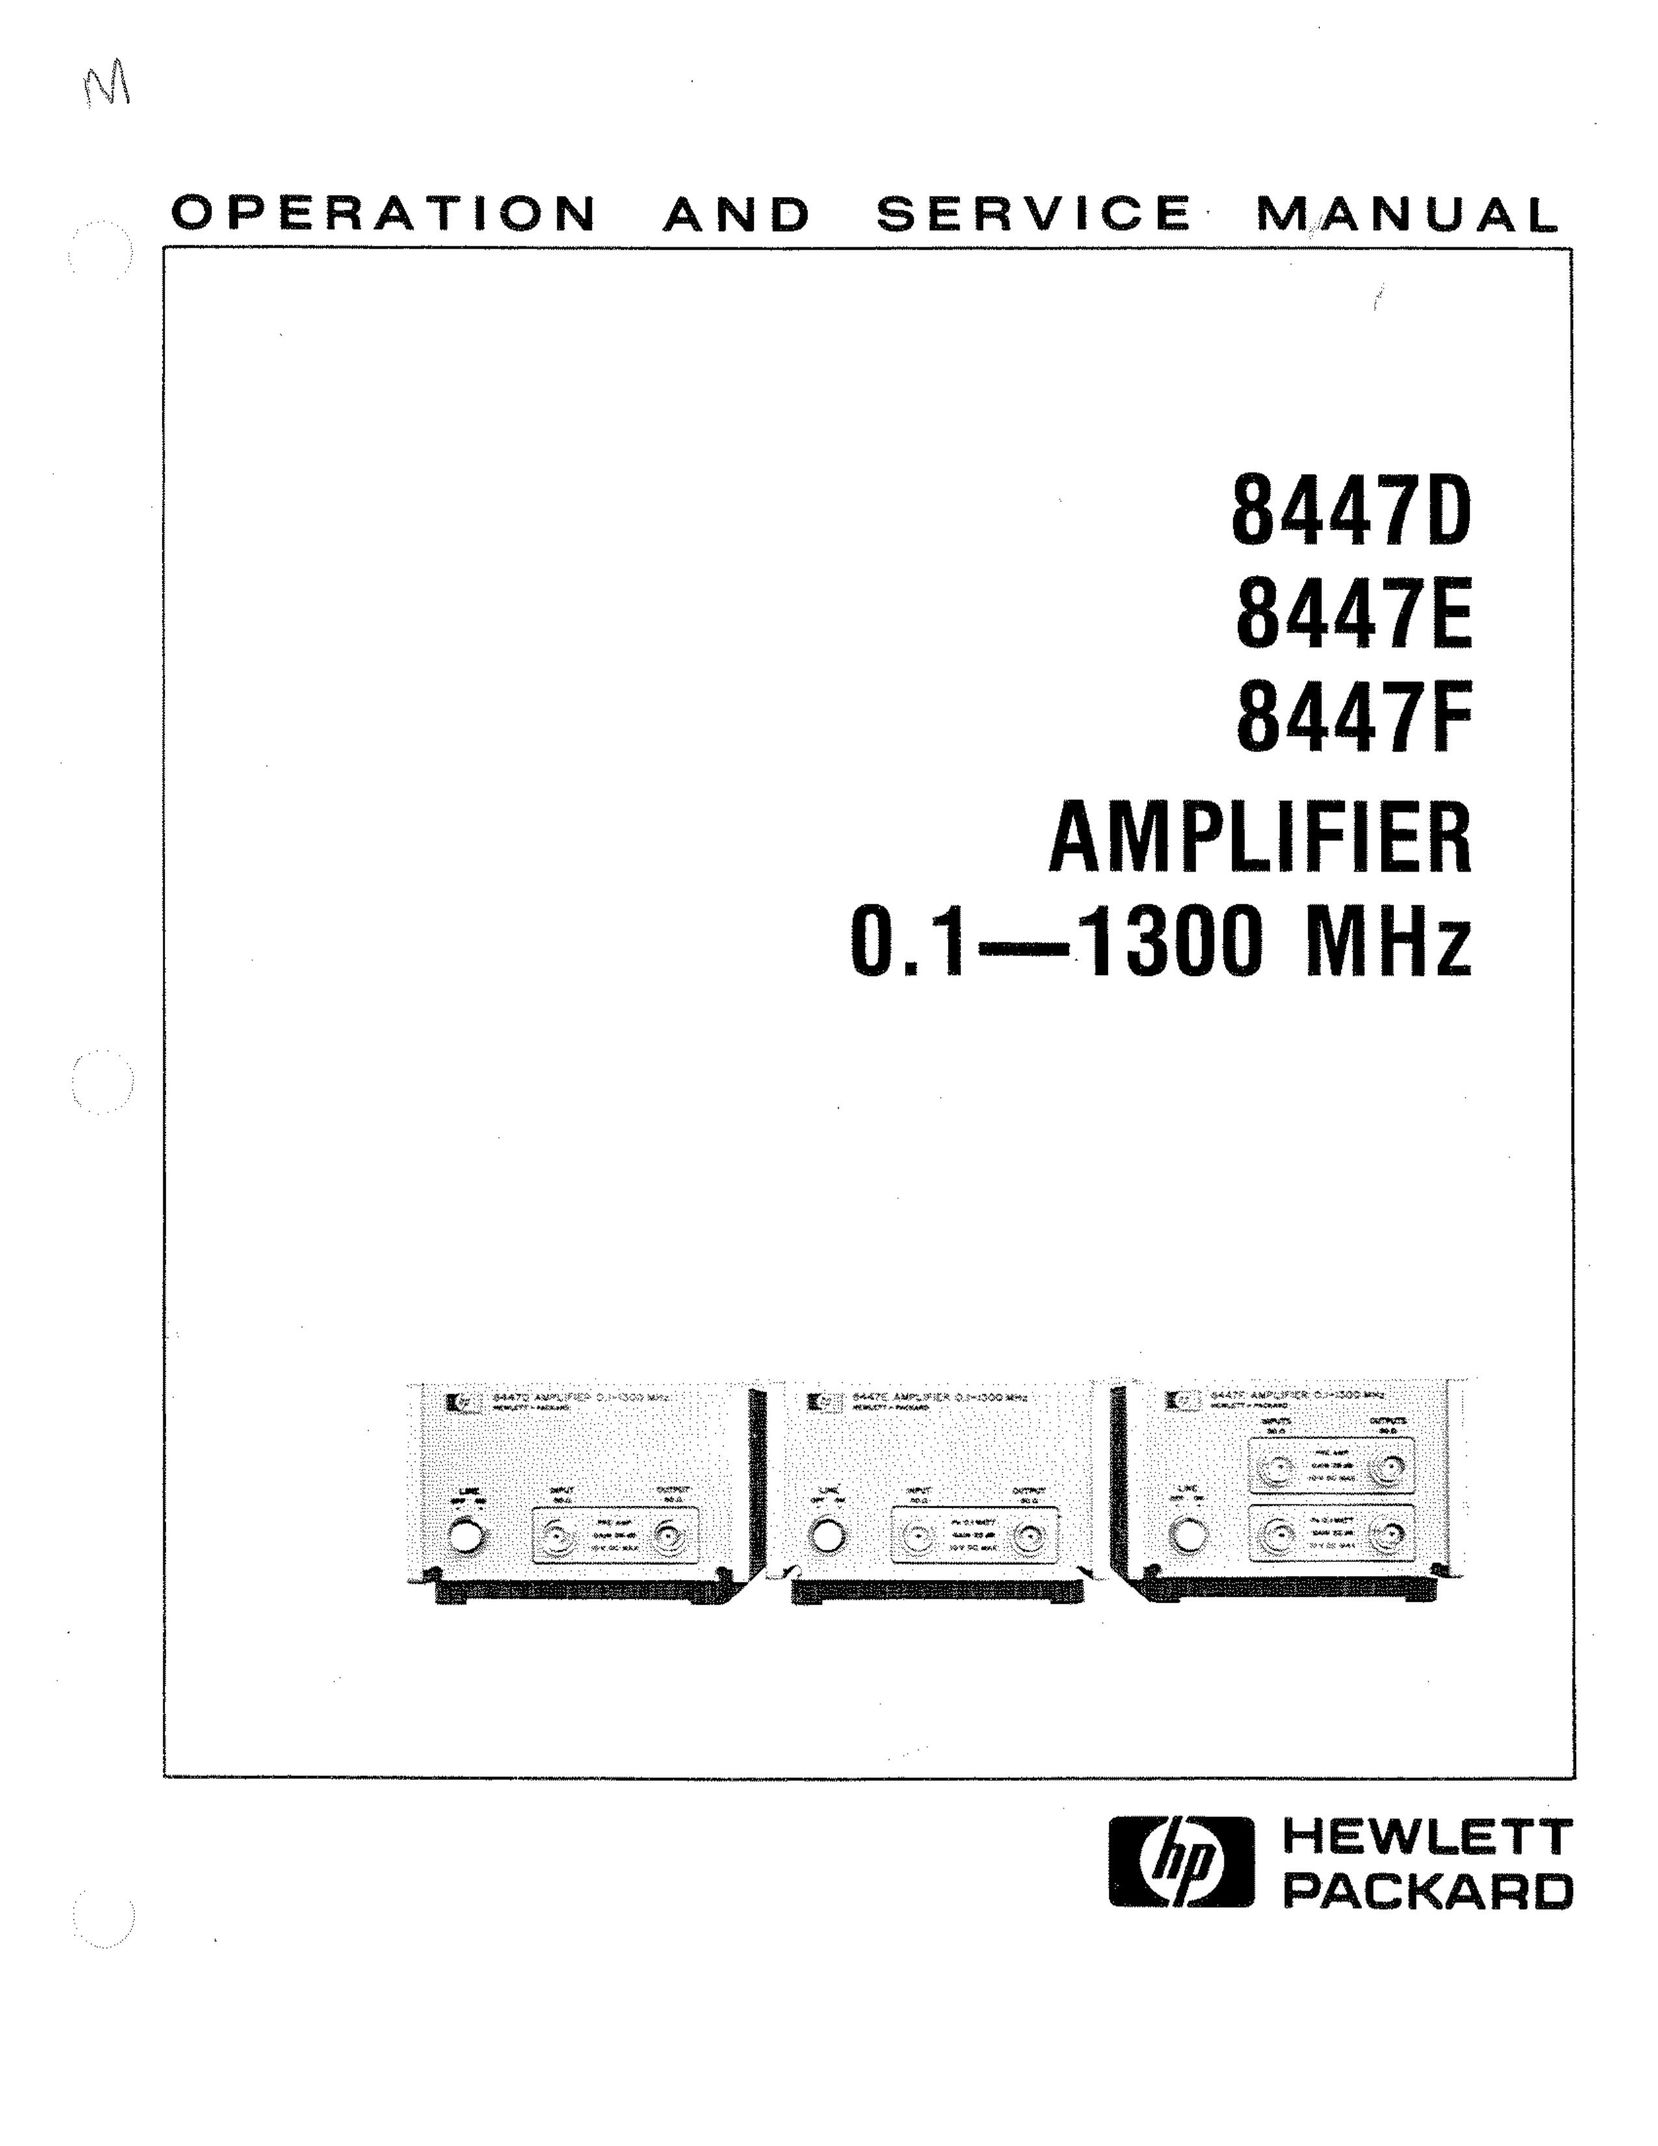 HP (Hewlett-Packard) 8447E Car Amplifier User Manual (Page 1)